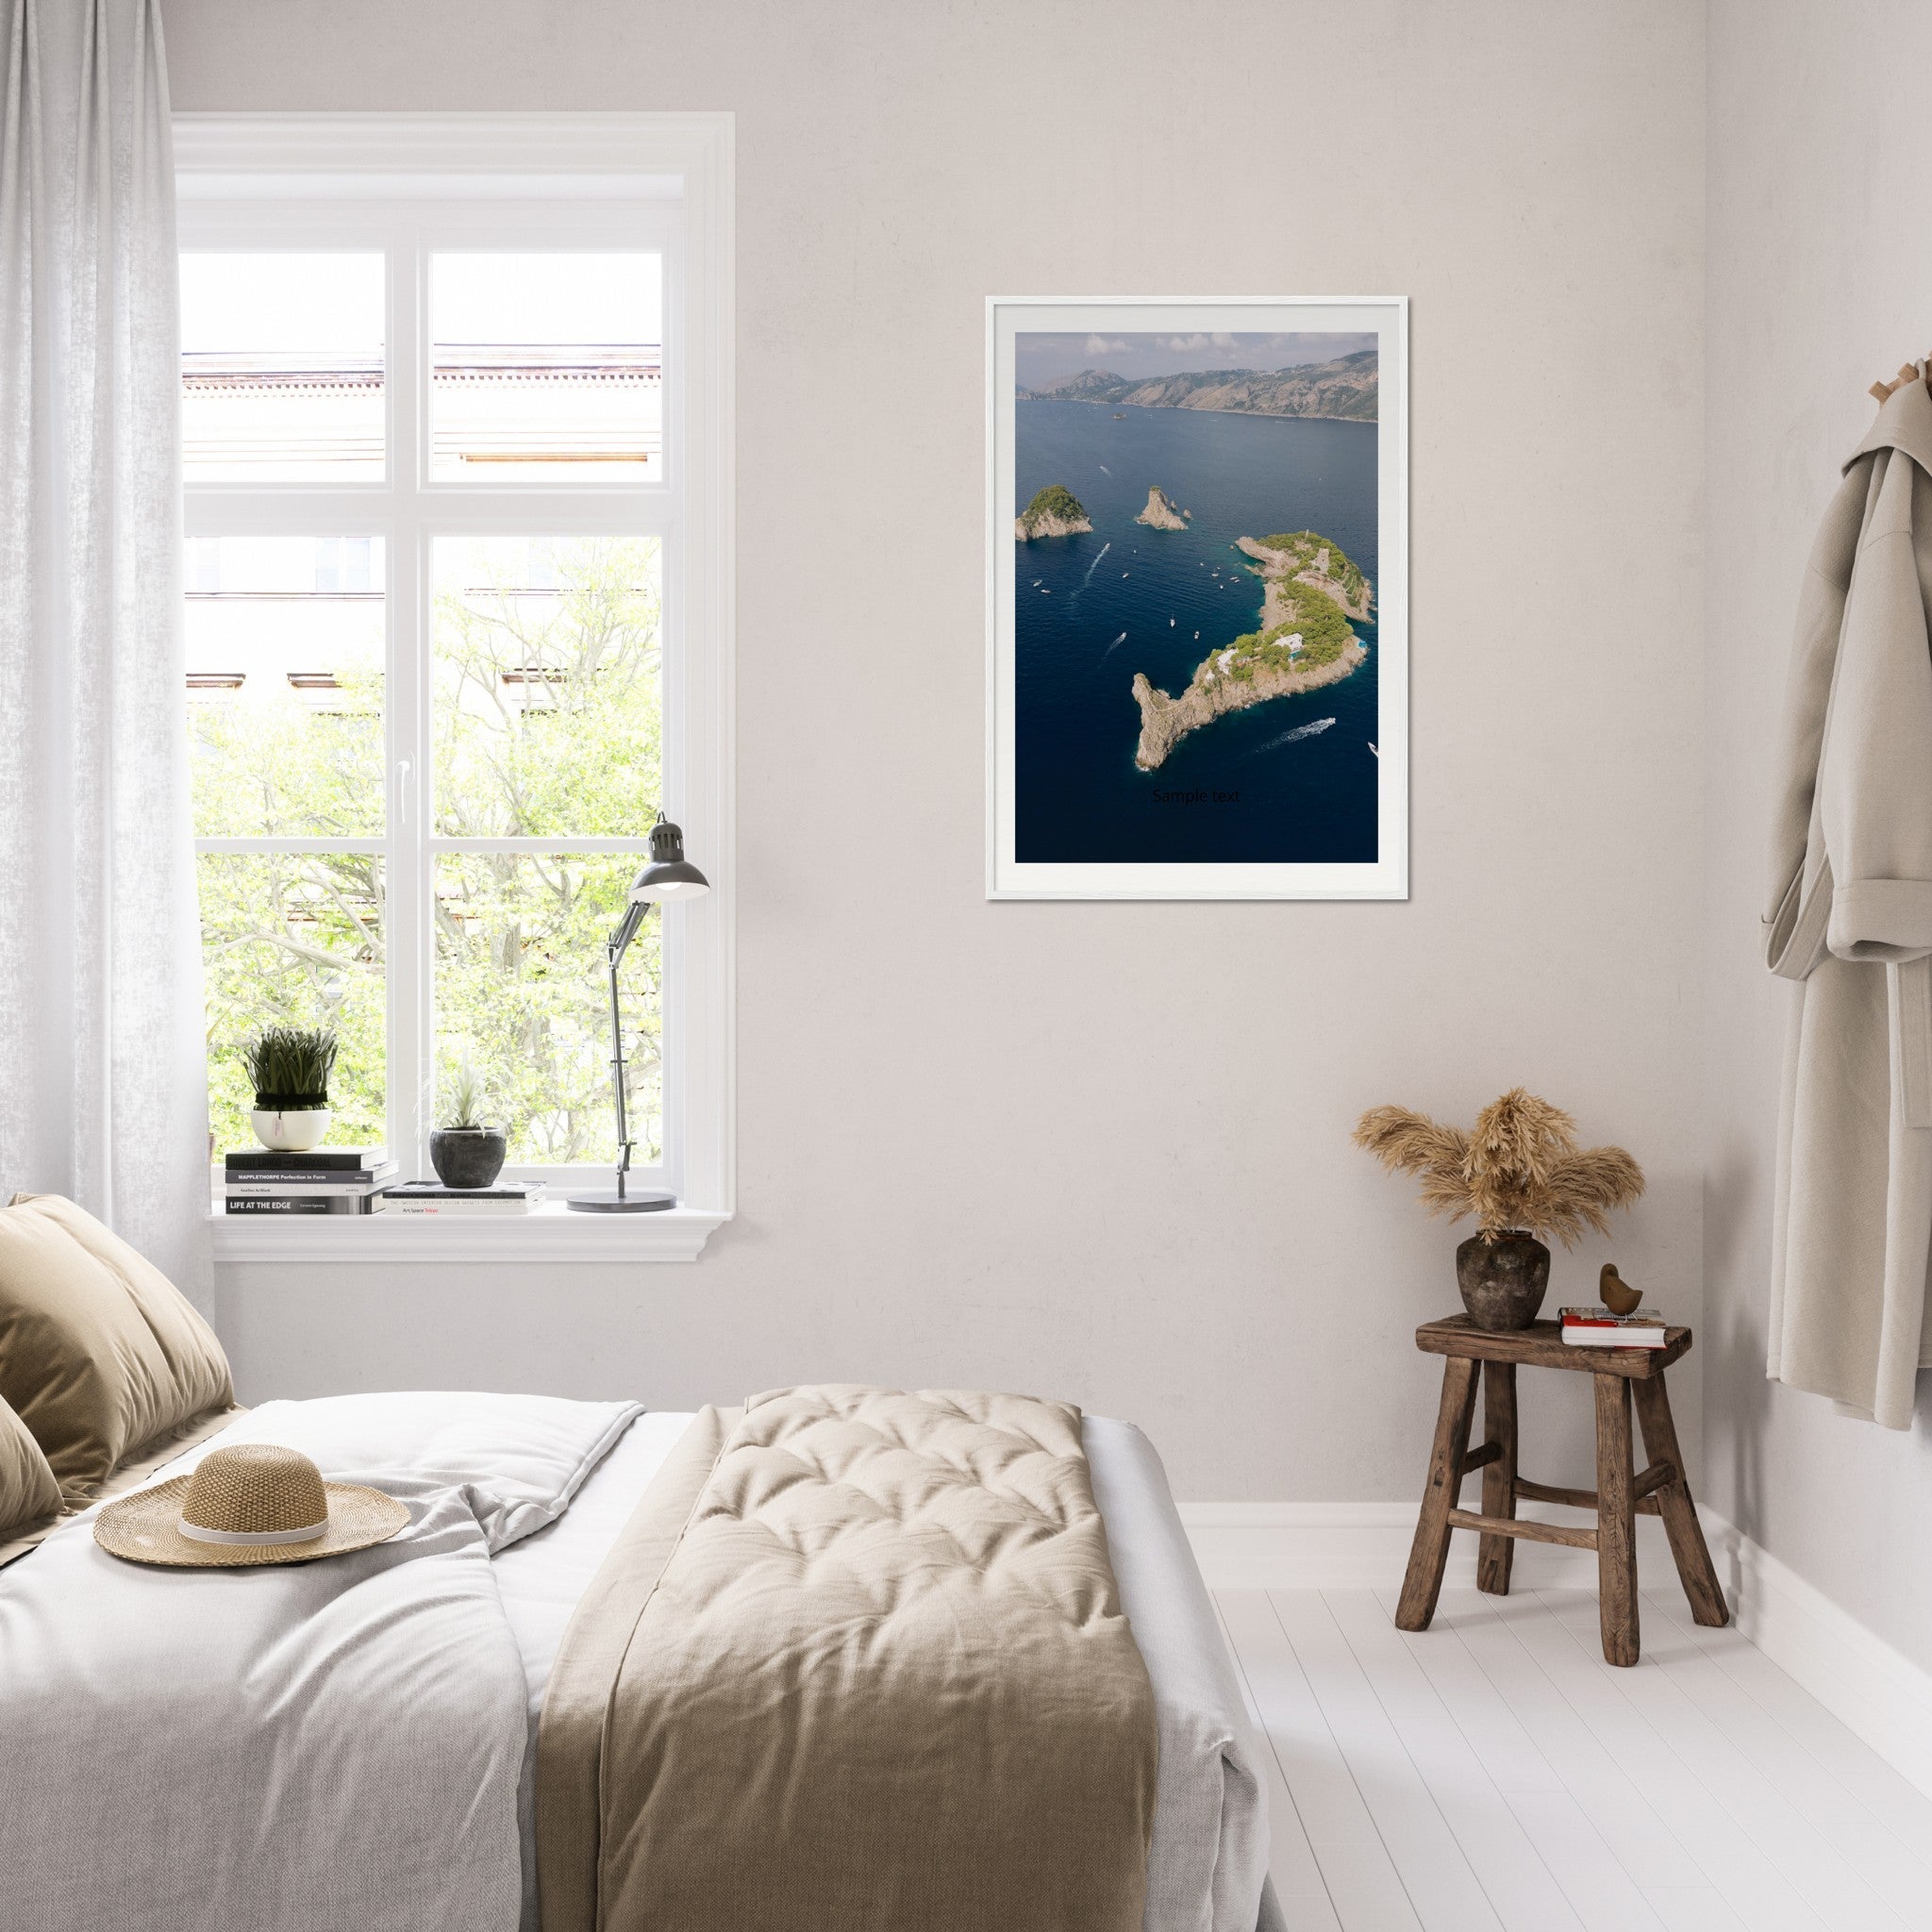 Li Galli Island - Positano | Amalfi Coast | Drone Shot | Print Museum-Quality Matte Paper Wooden Framed - AMALFITANA STORE